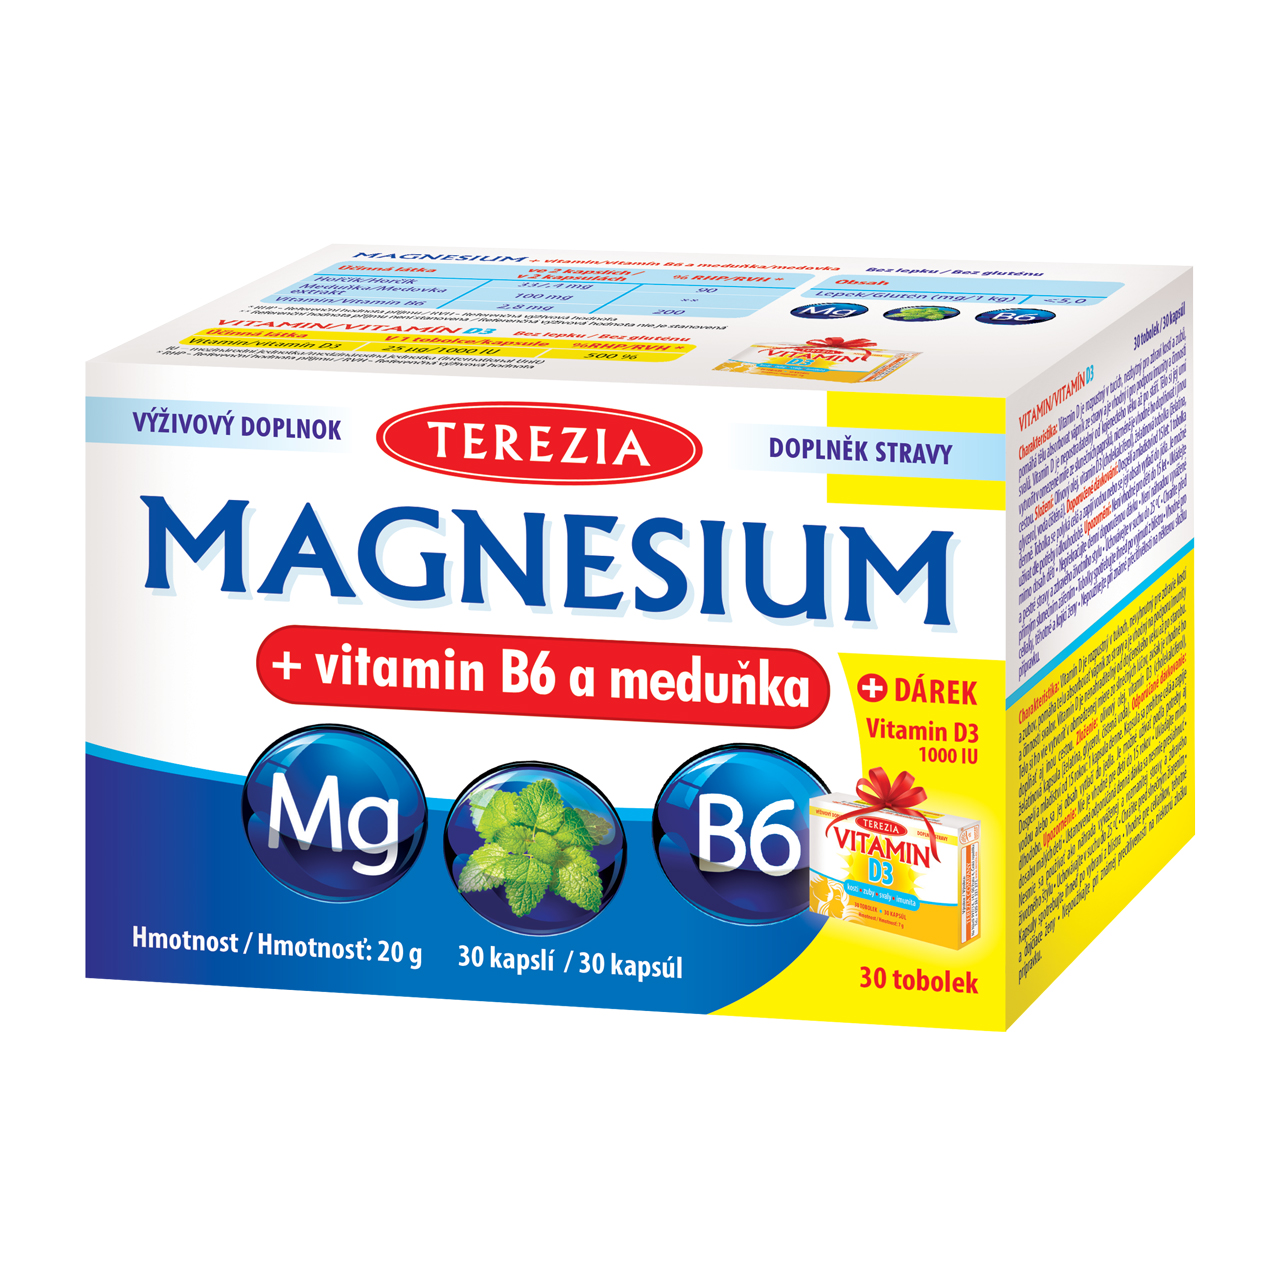 Zobrazit detail výrobku Terezia Company Magnesium + vitamin B6 a meduňka 30 kapslí + DÁREK Vitamin D3 1000 IU 30 tobolek